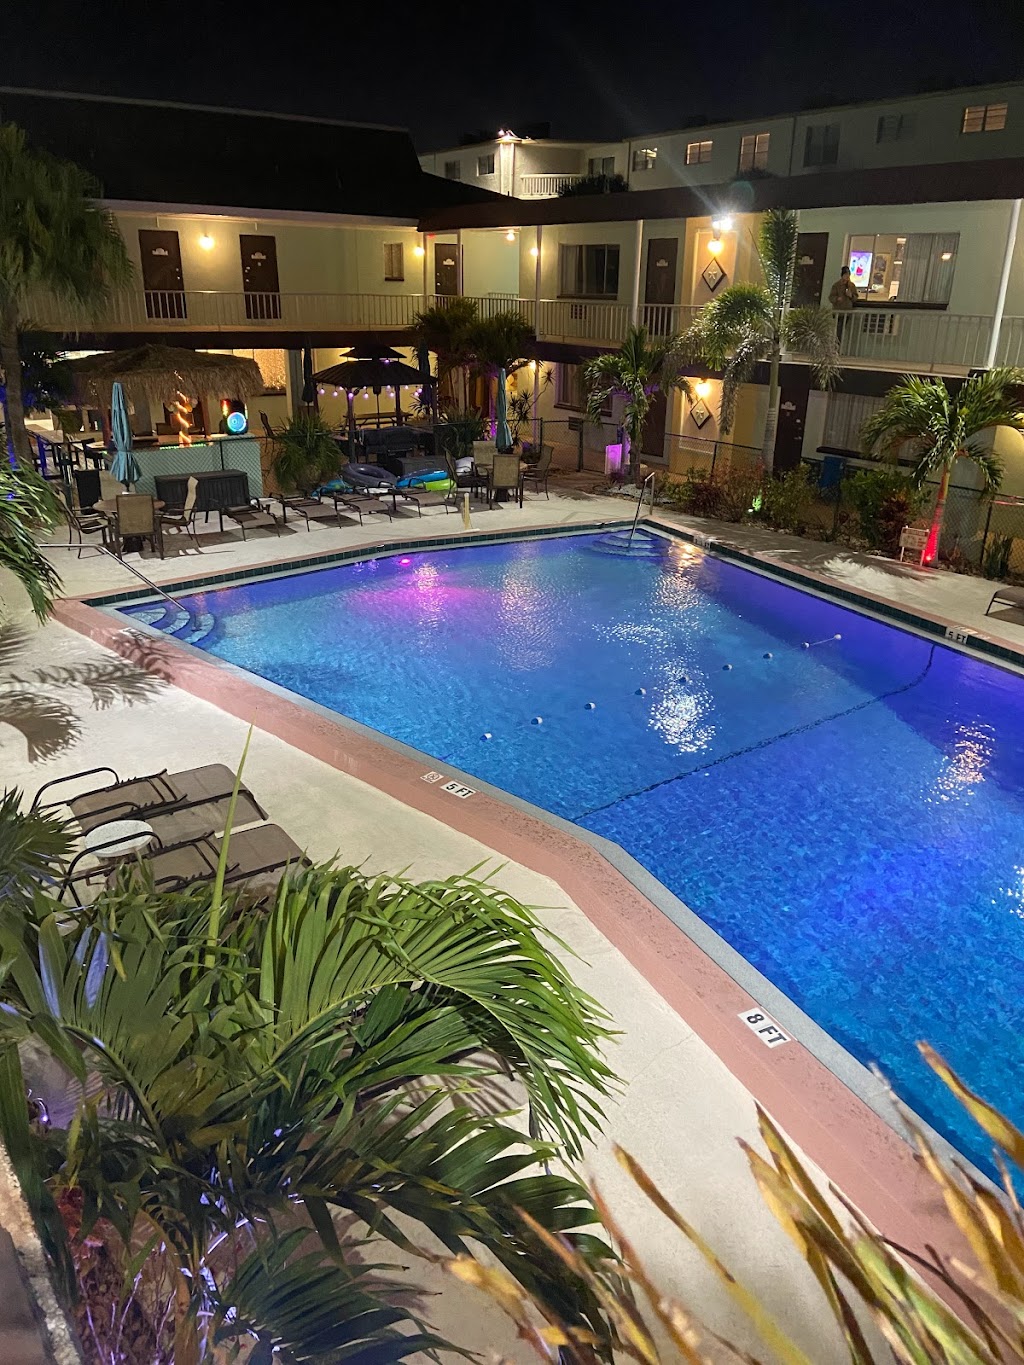 Island House Resort Hotel | 17103 Gulf Blvd, North Redington Beach, FL 33708 | Phone: (727) 392-2241